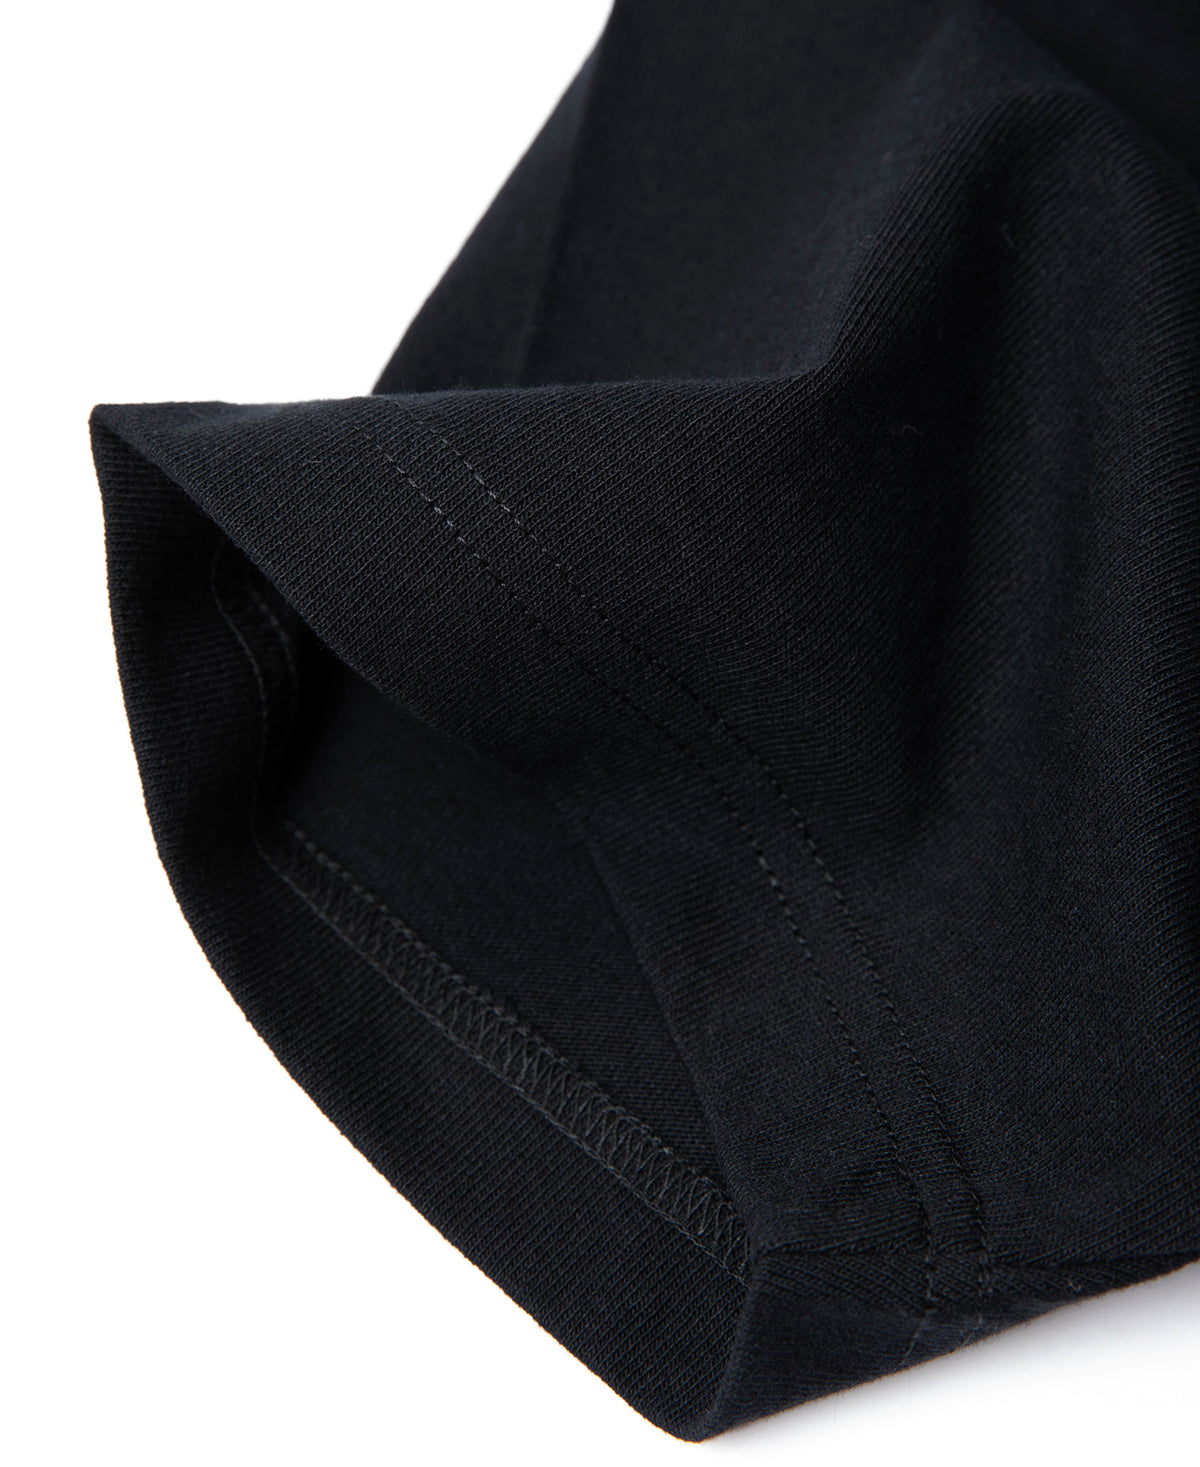 9 oz US Cotton Tubular T-Shirt - Black